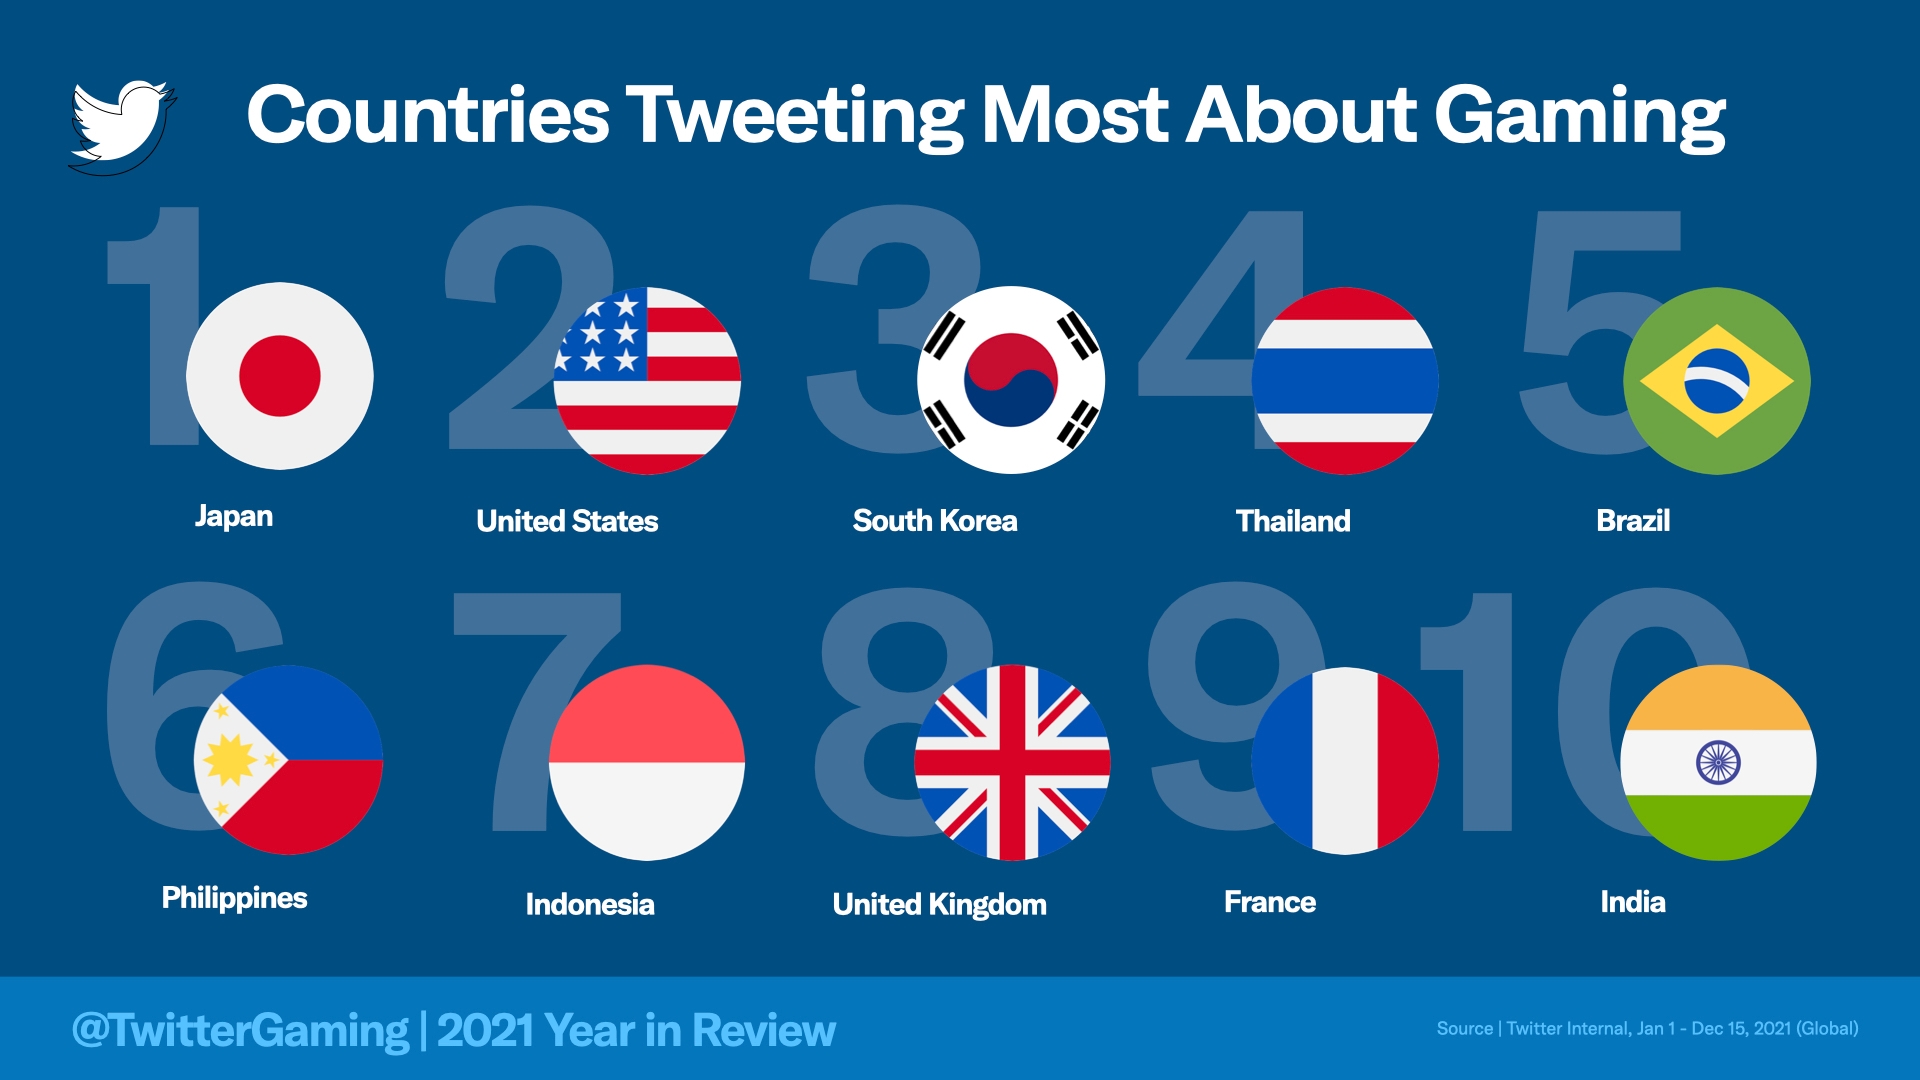 2021_CountriesTweetingMost.jpeg.img.fullhd.medium.jpg